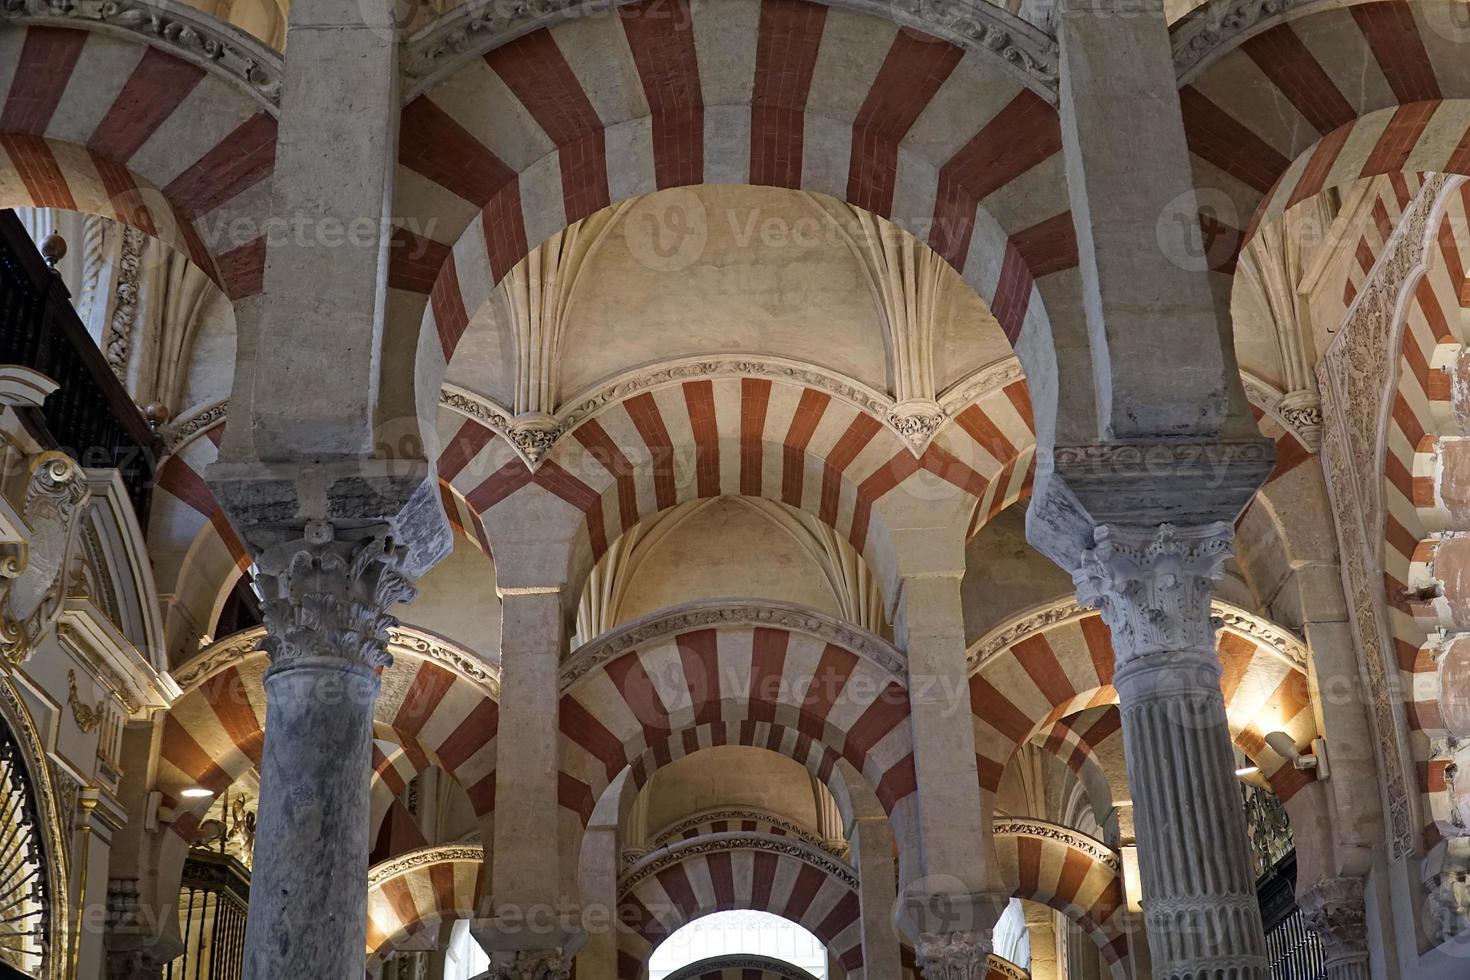 interiör av mezquita - moské - katedral av cordoba i Spanien foto